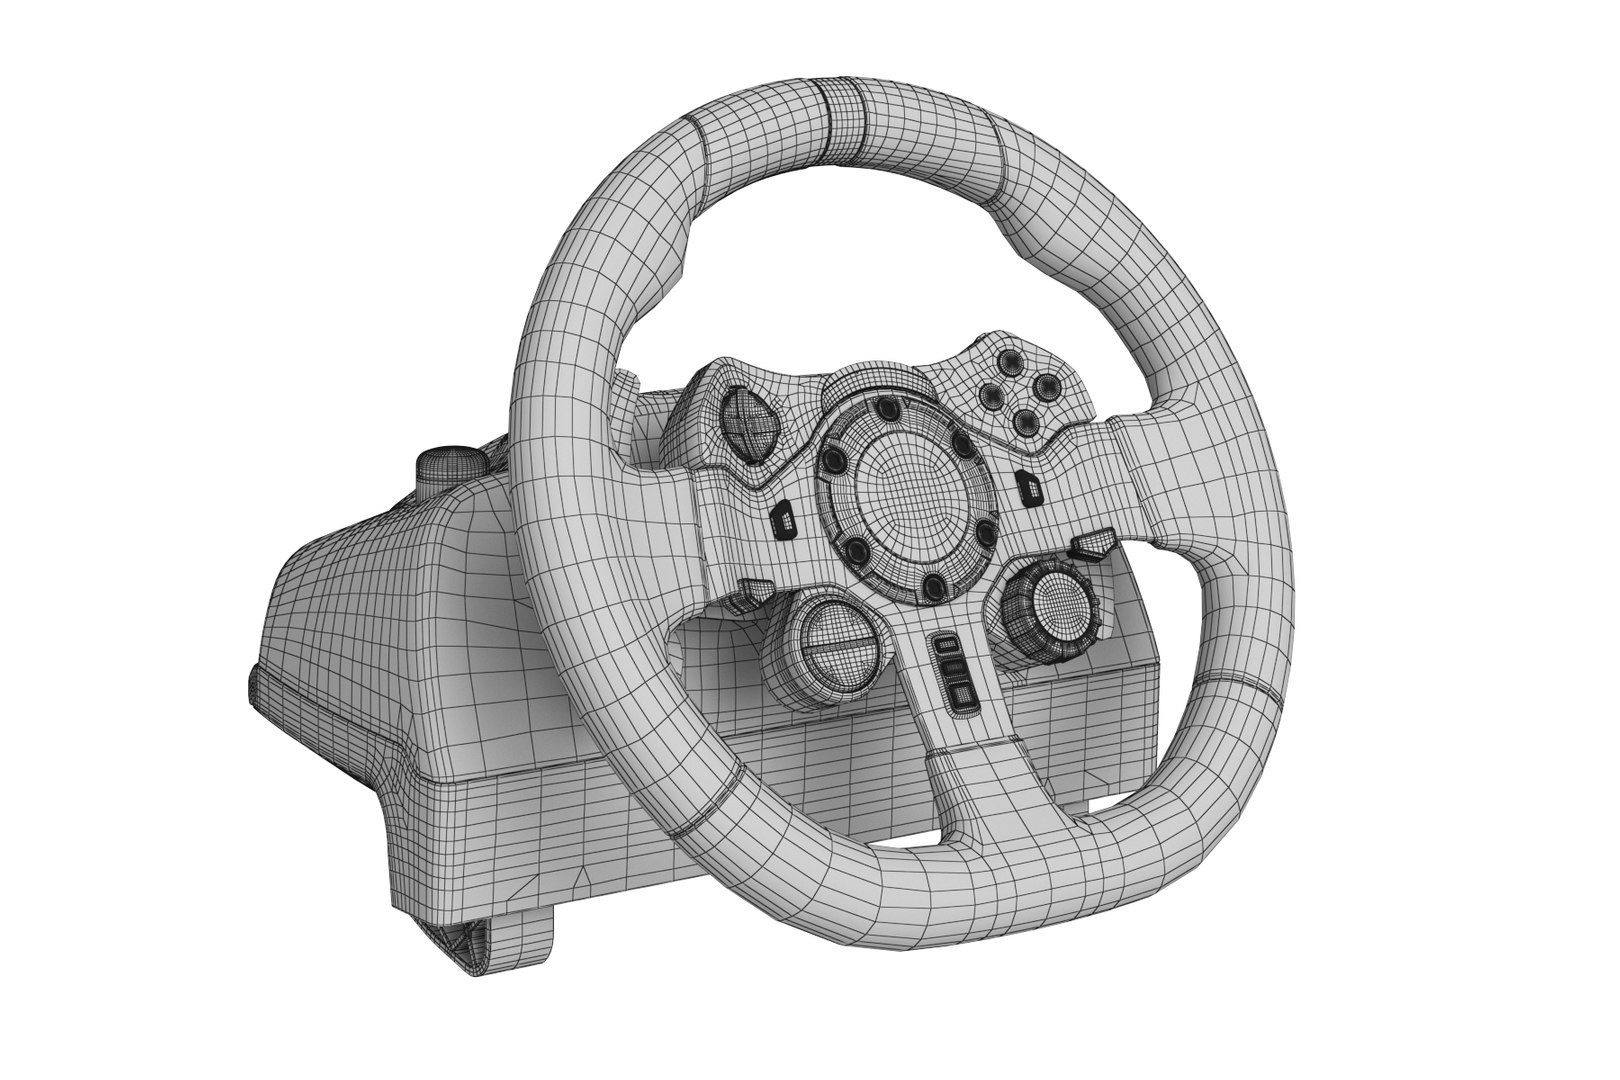 Logitech g29 driving force 3D model - TurboSquid 1601675